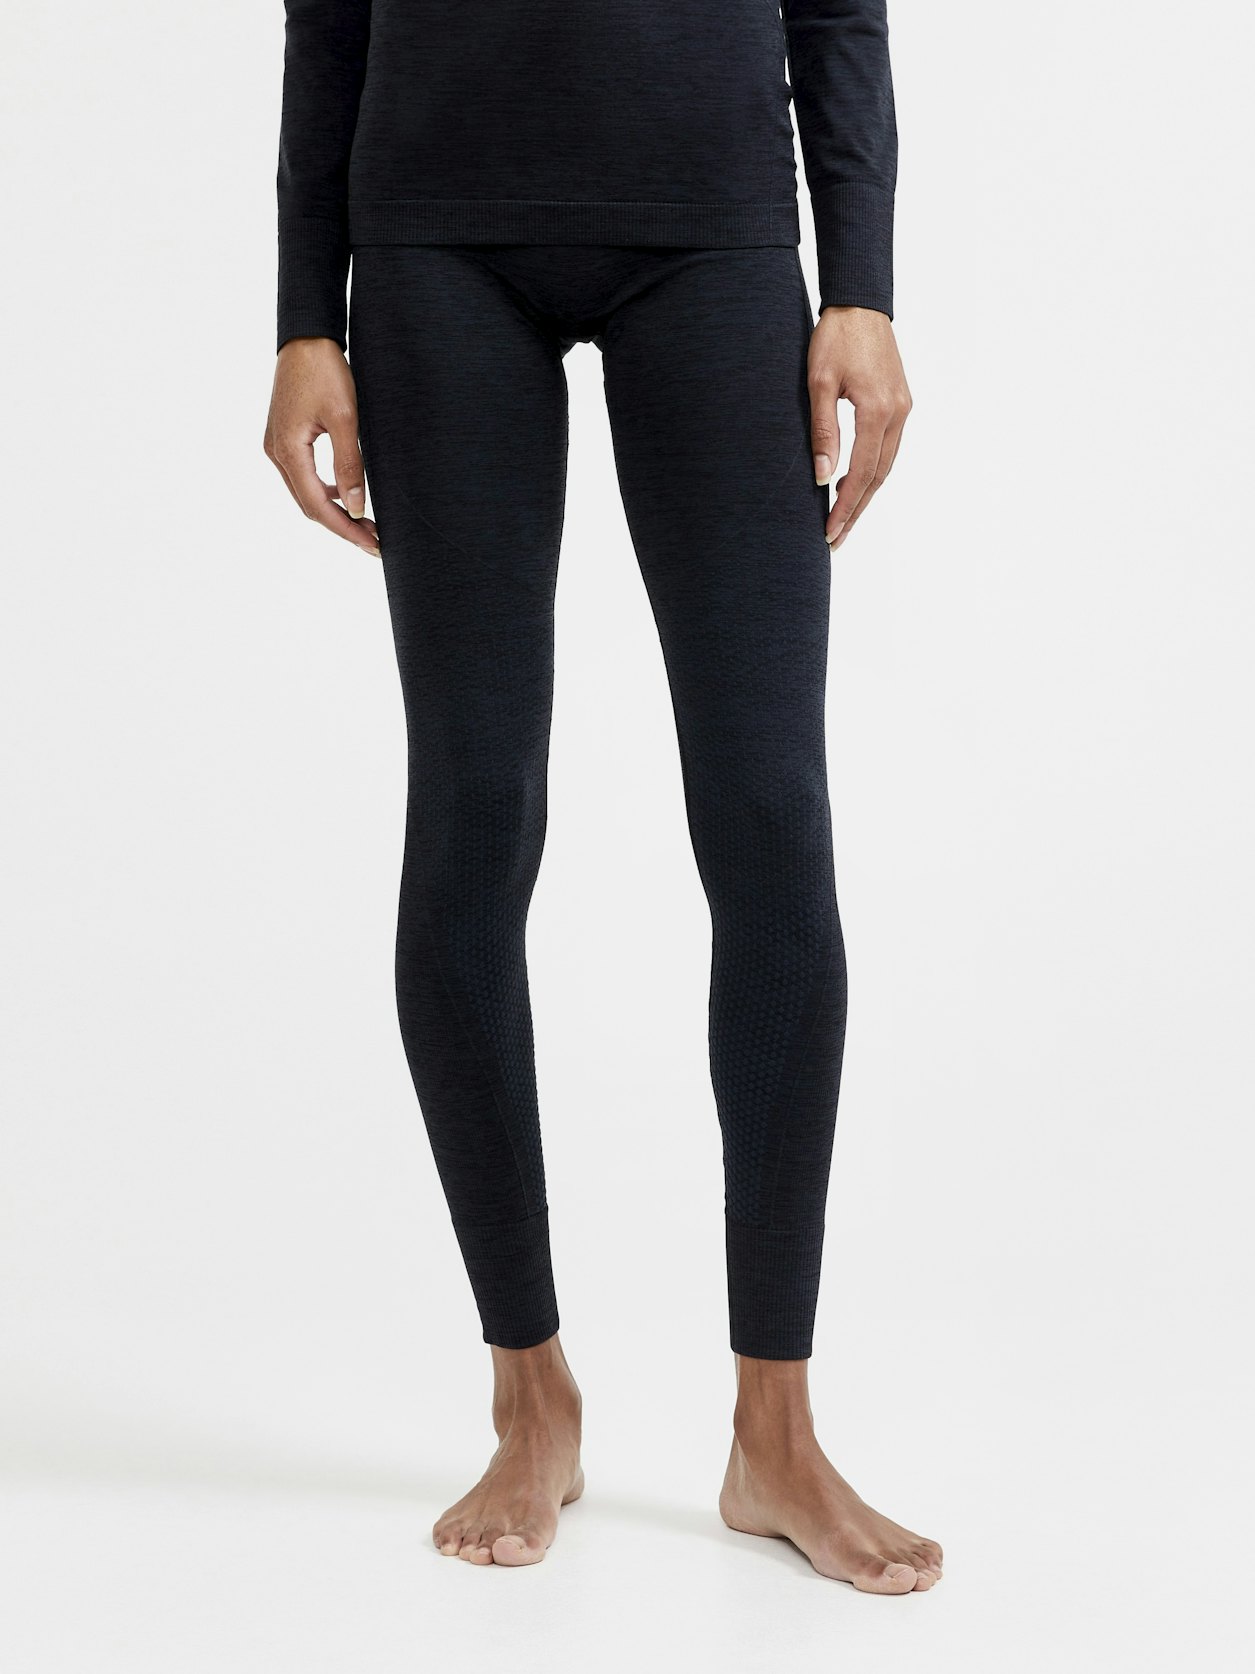 CORE Dry Active Comfort Pants W - Black | Craft Sportswear